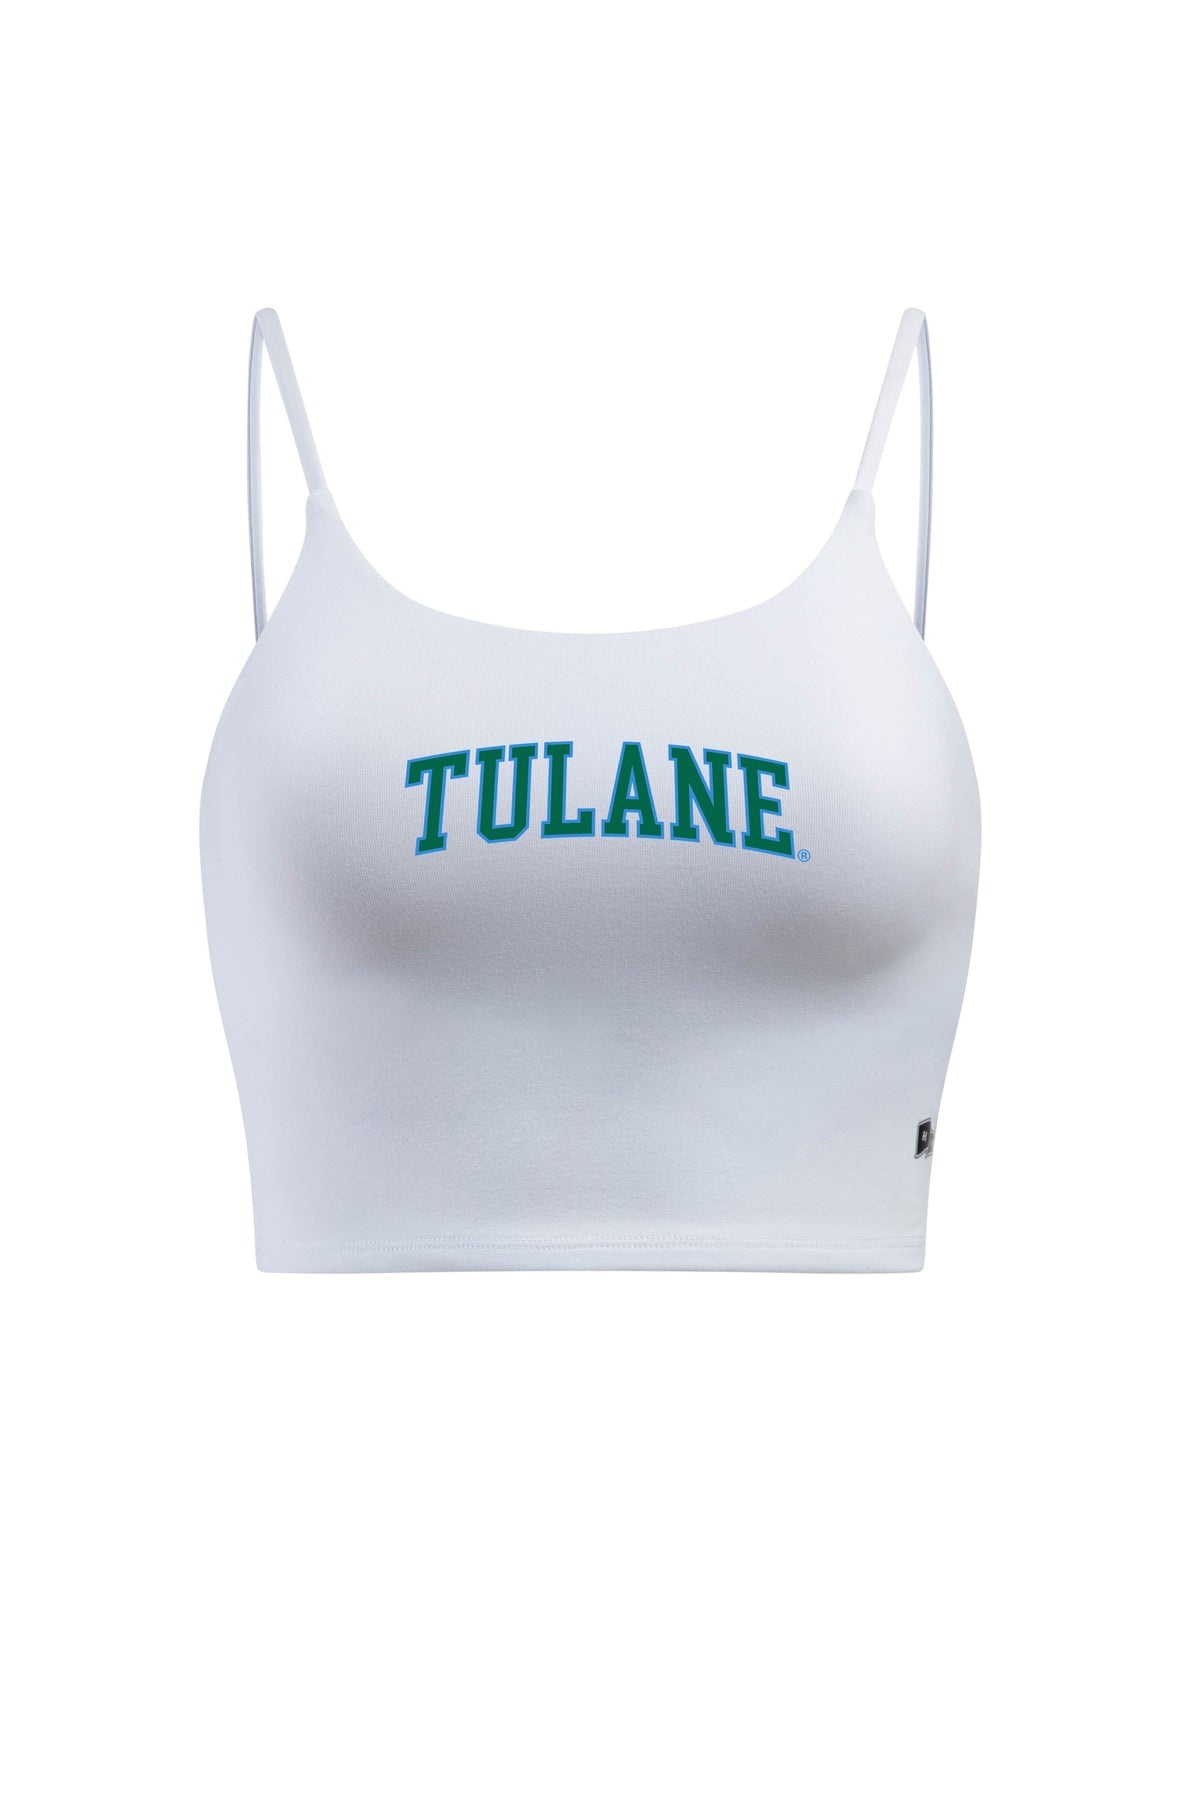 Tulane University Bra Tank Top